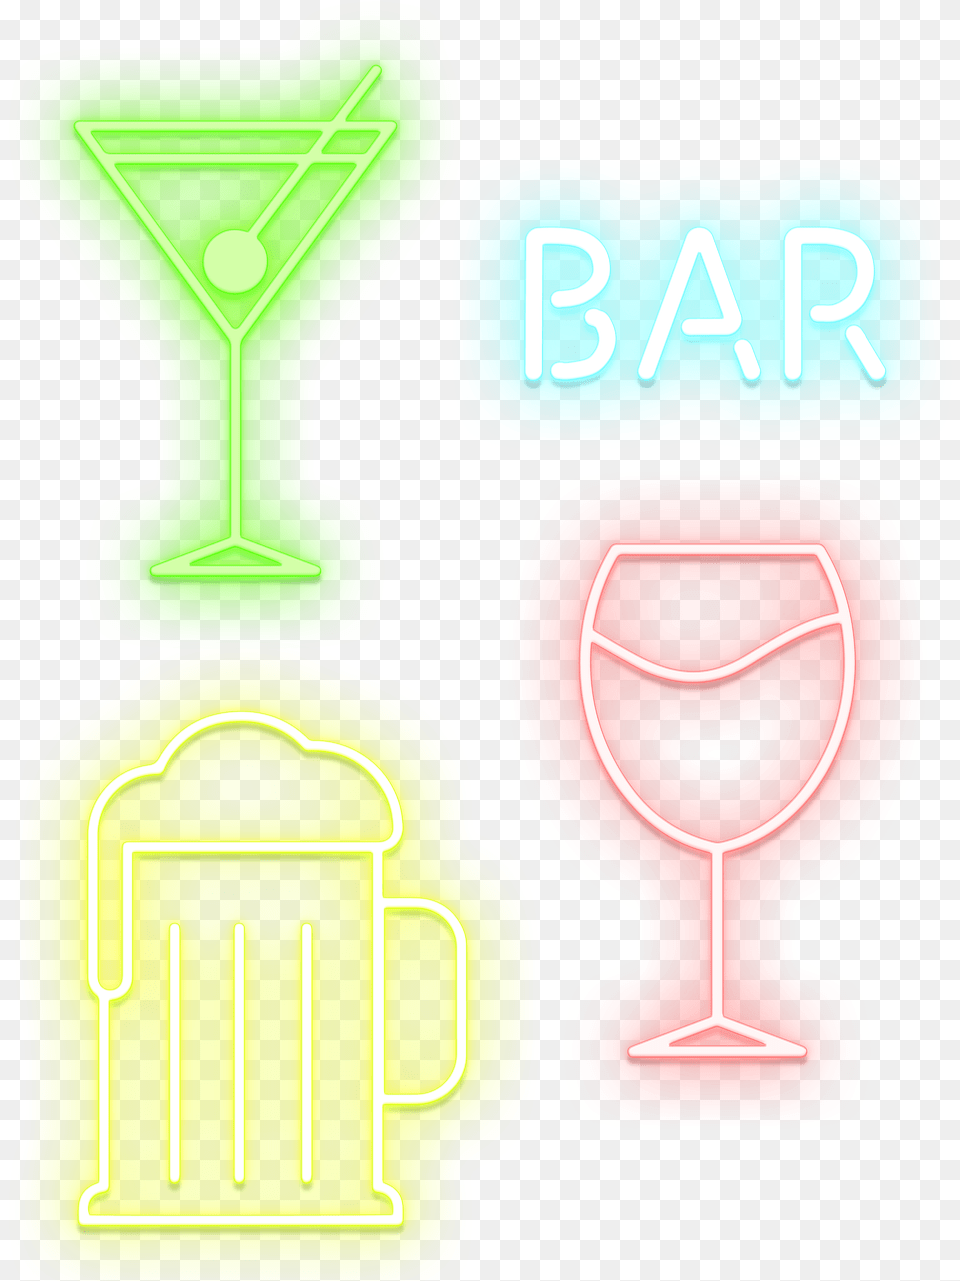 Sign Neon Drinks Image On Pixabay Drinks Neon, Light, Food, Sweets Png